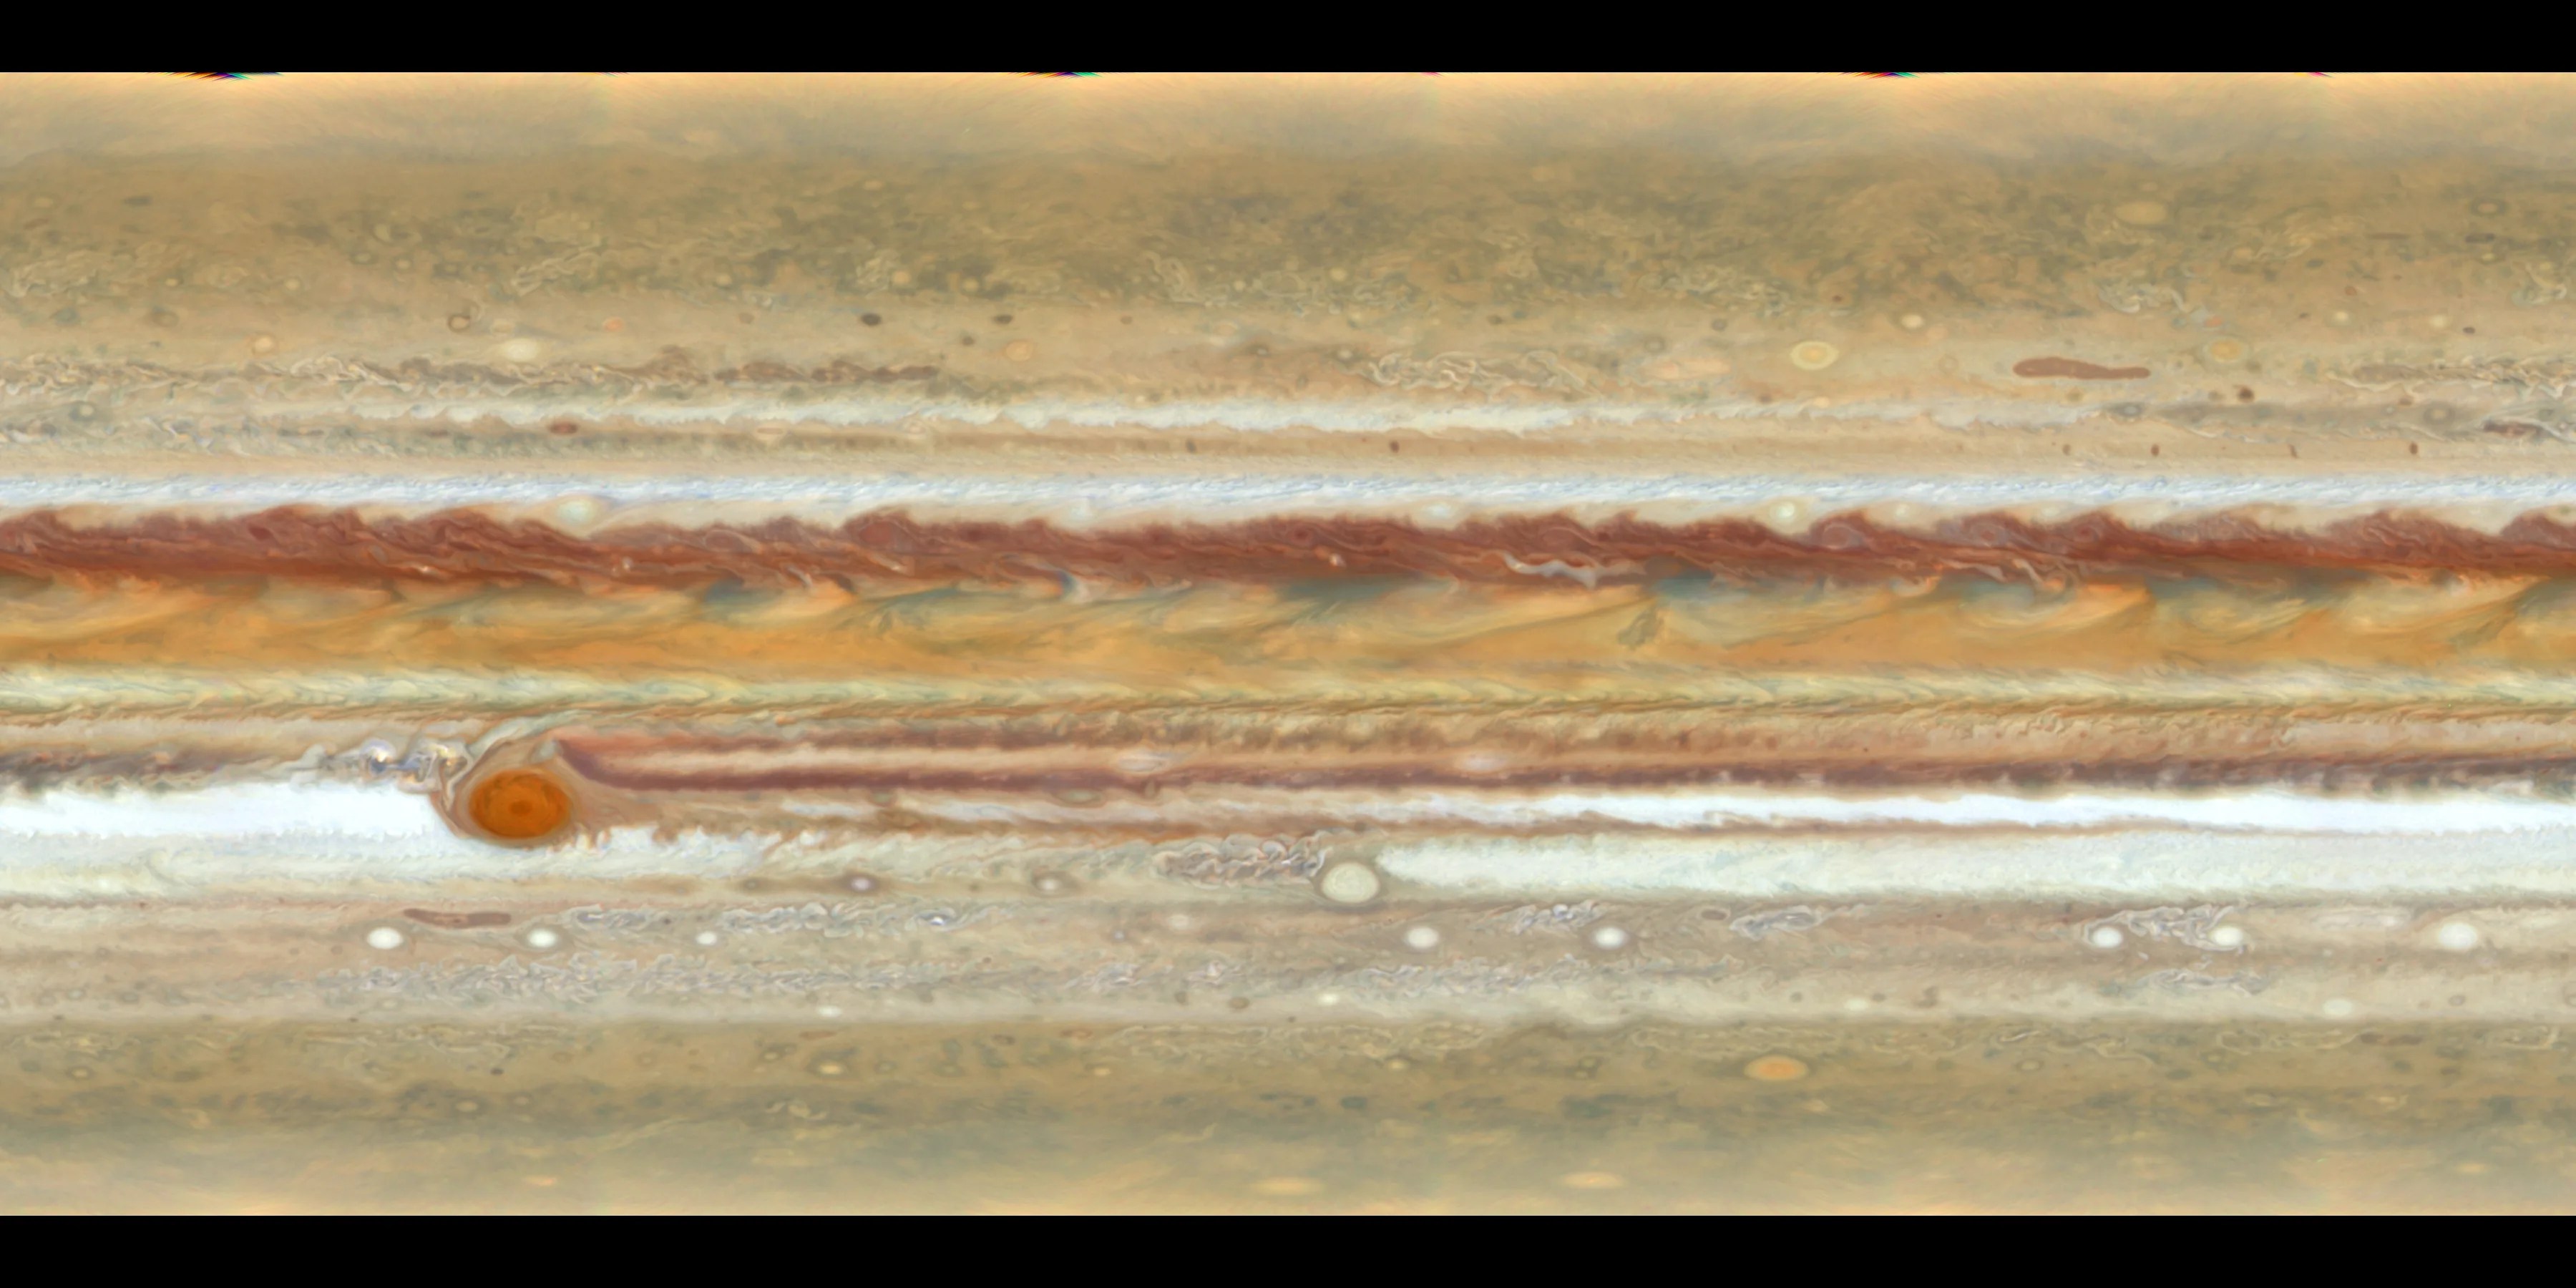 flat-map version of Hubble observations of Jupiter.